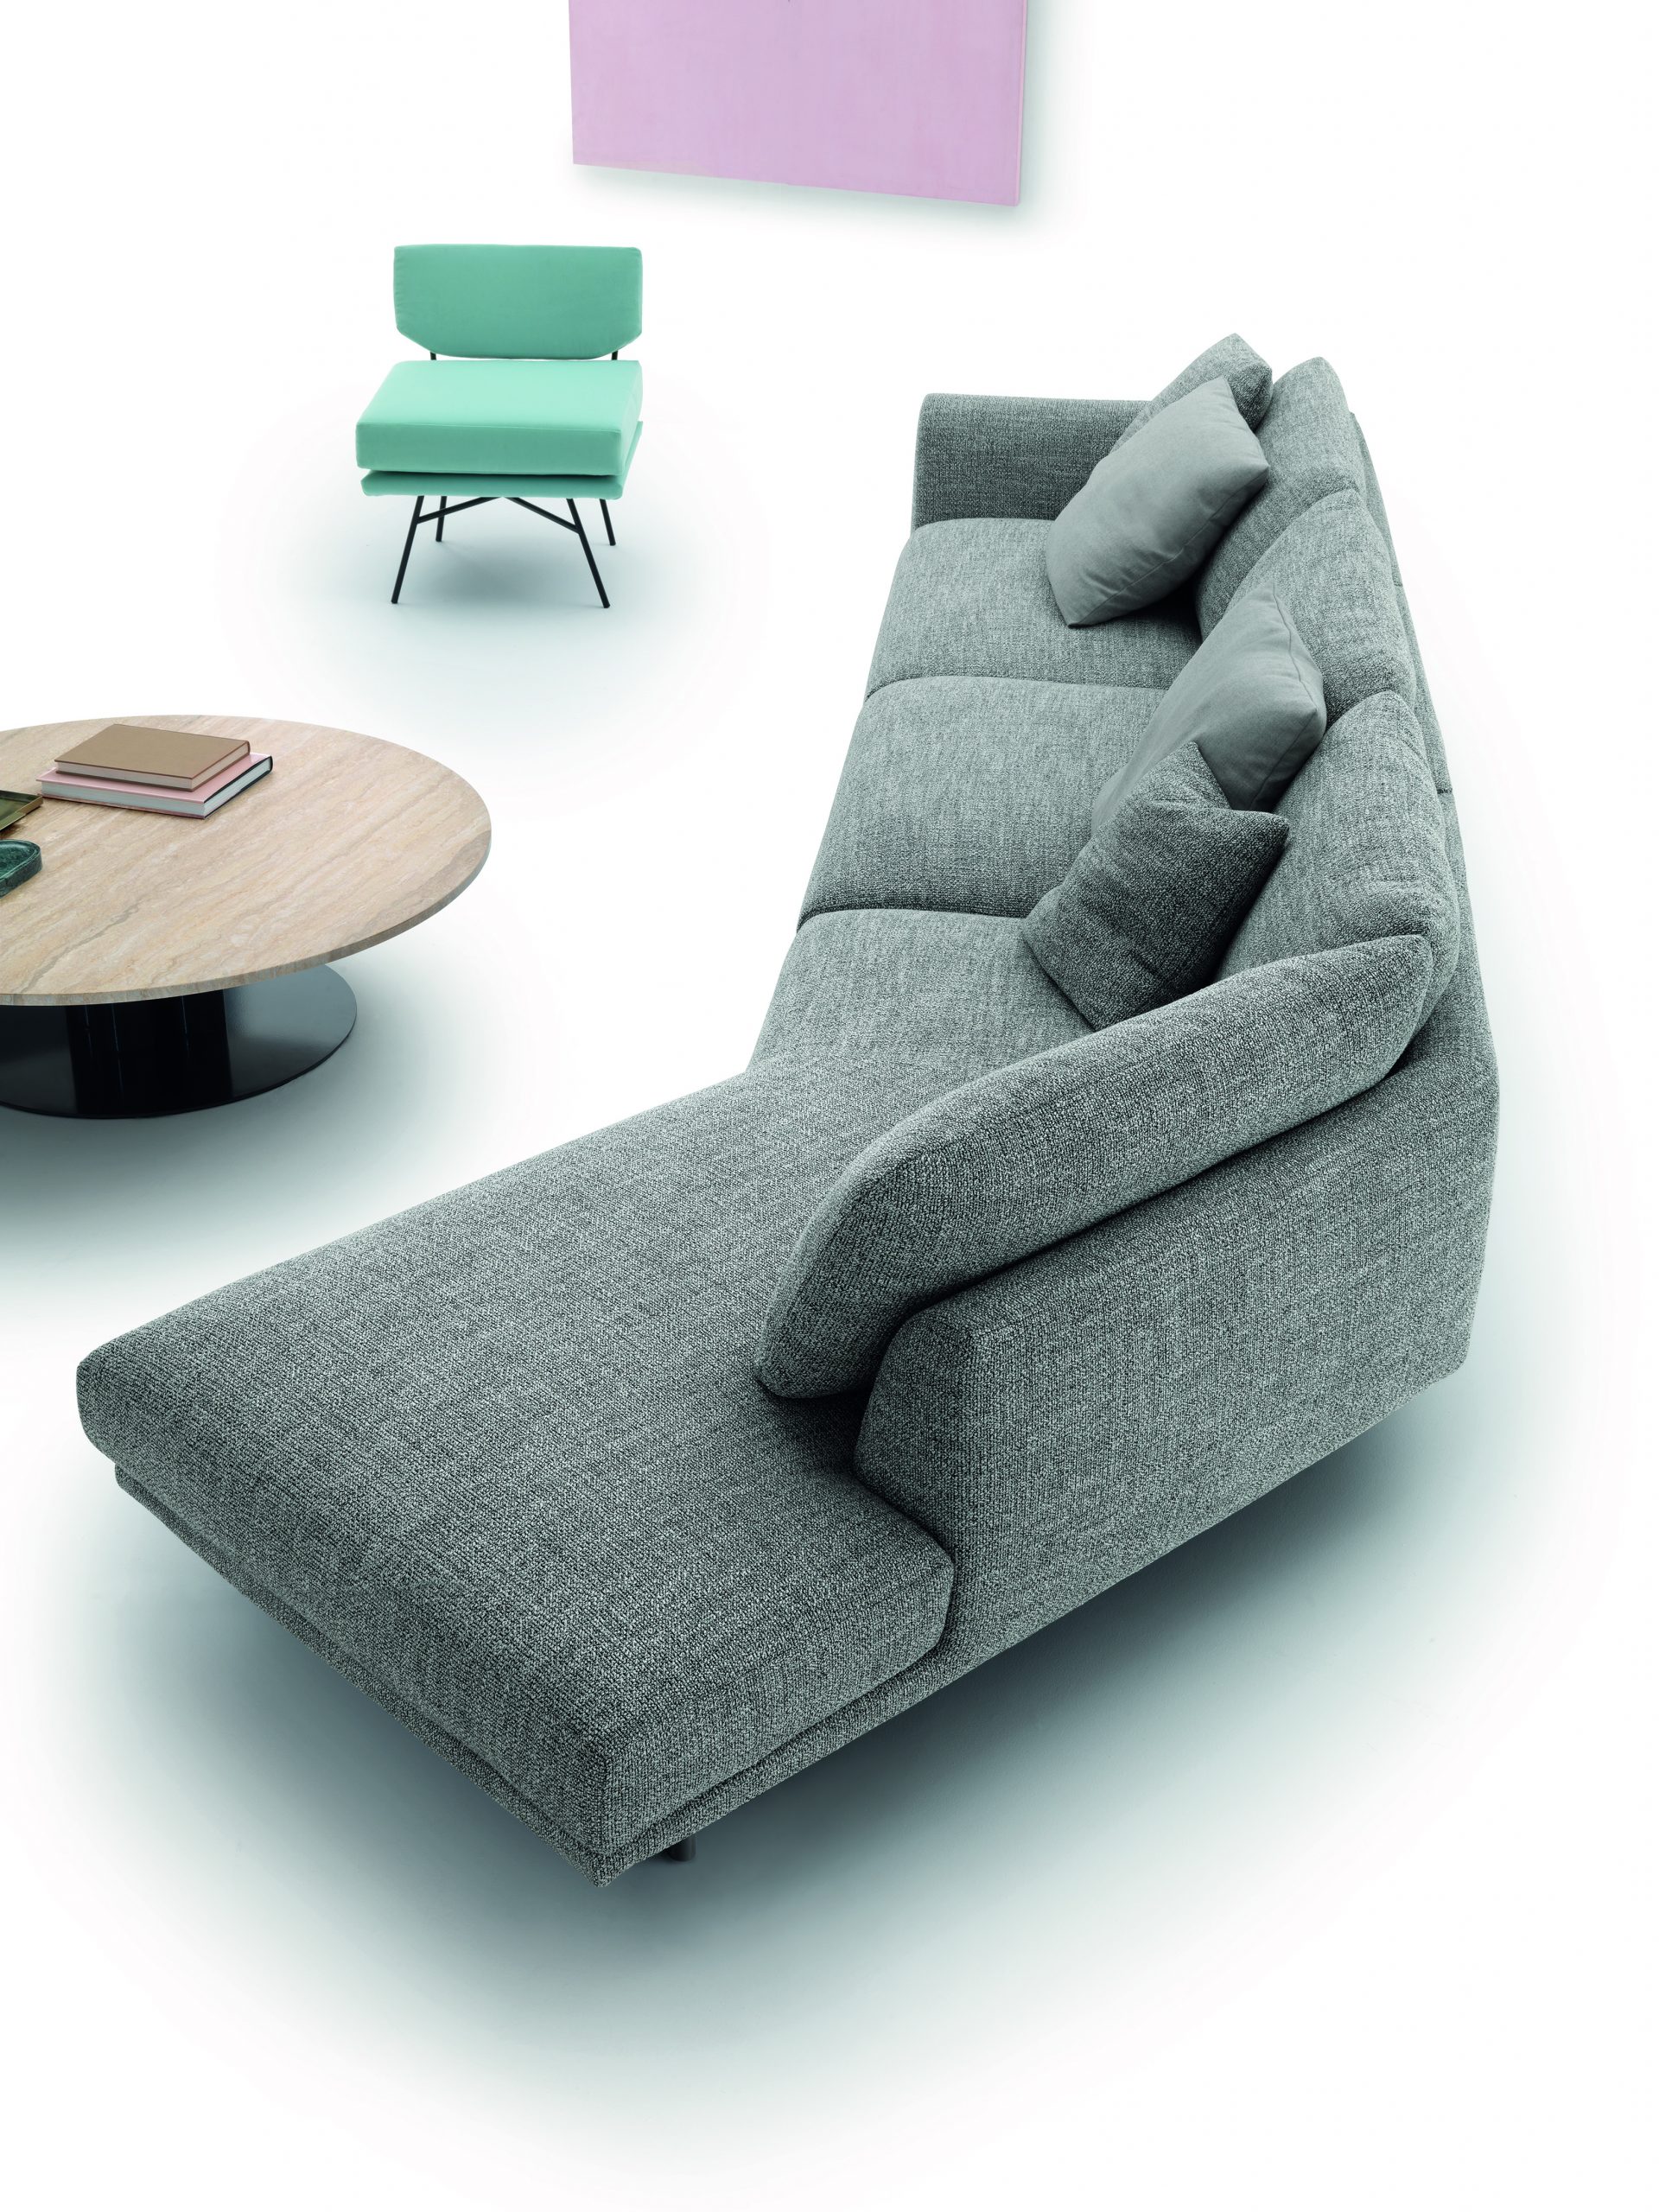 Arflex Bel Air sofa